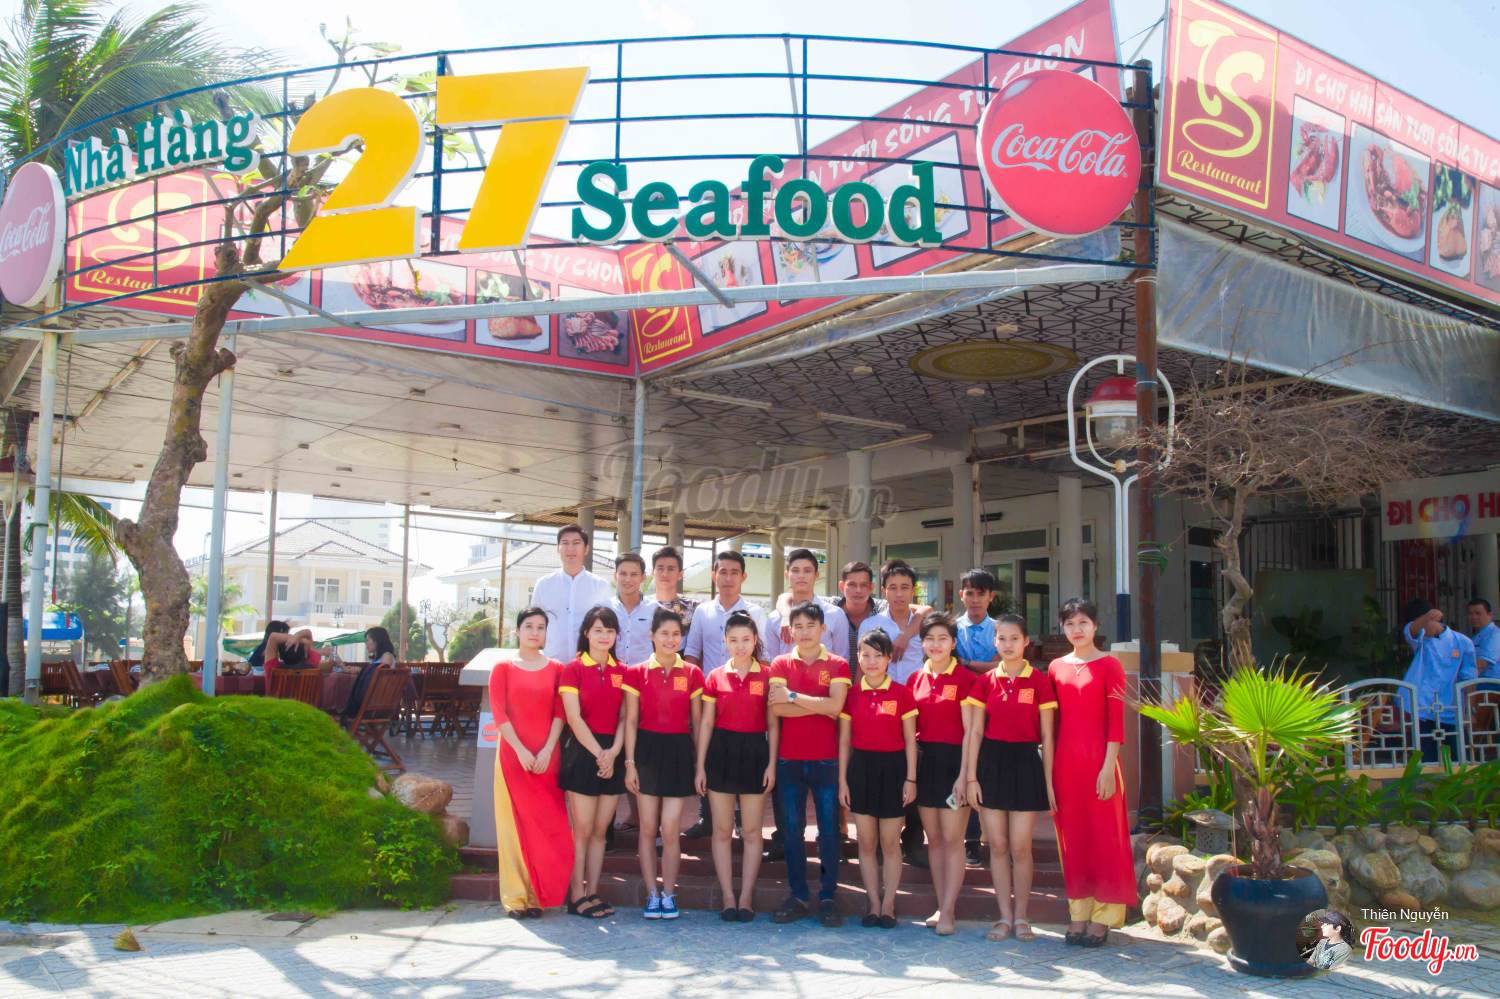 27 Seafood Restaurant